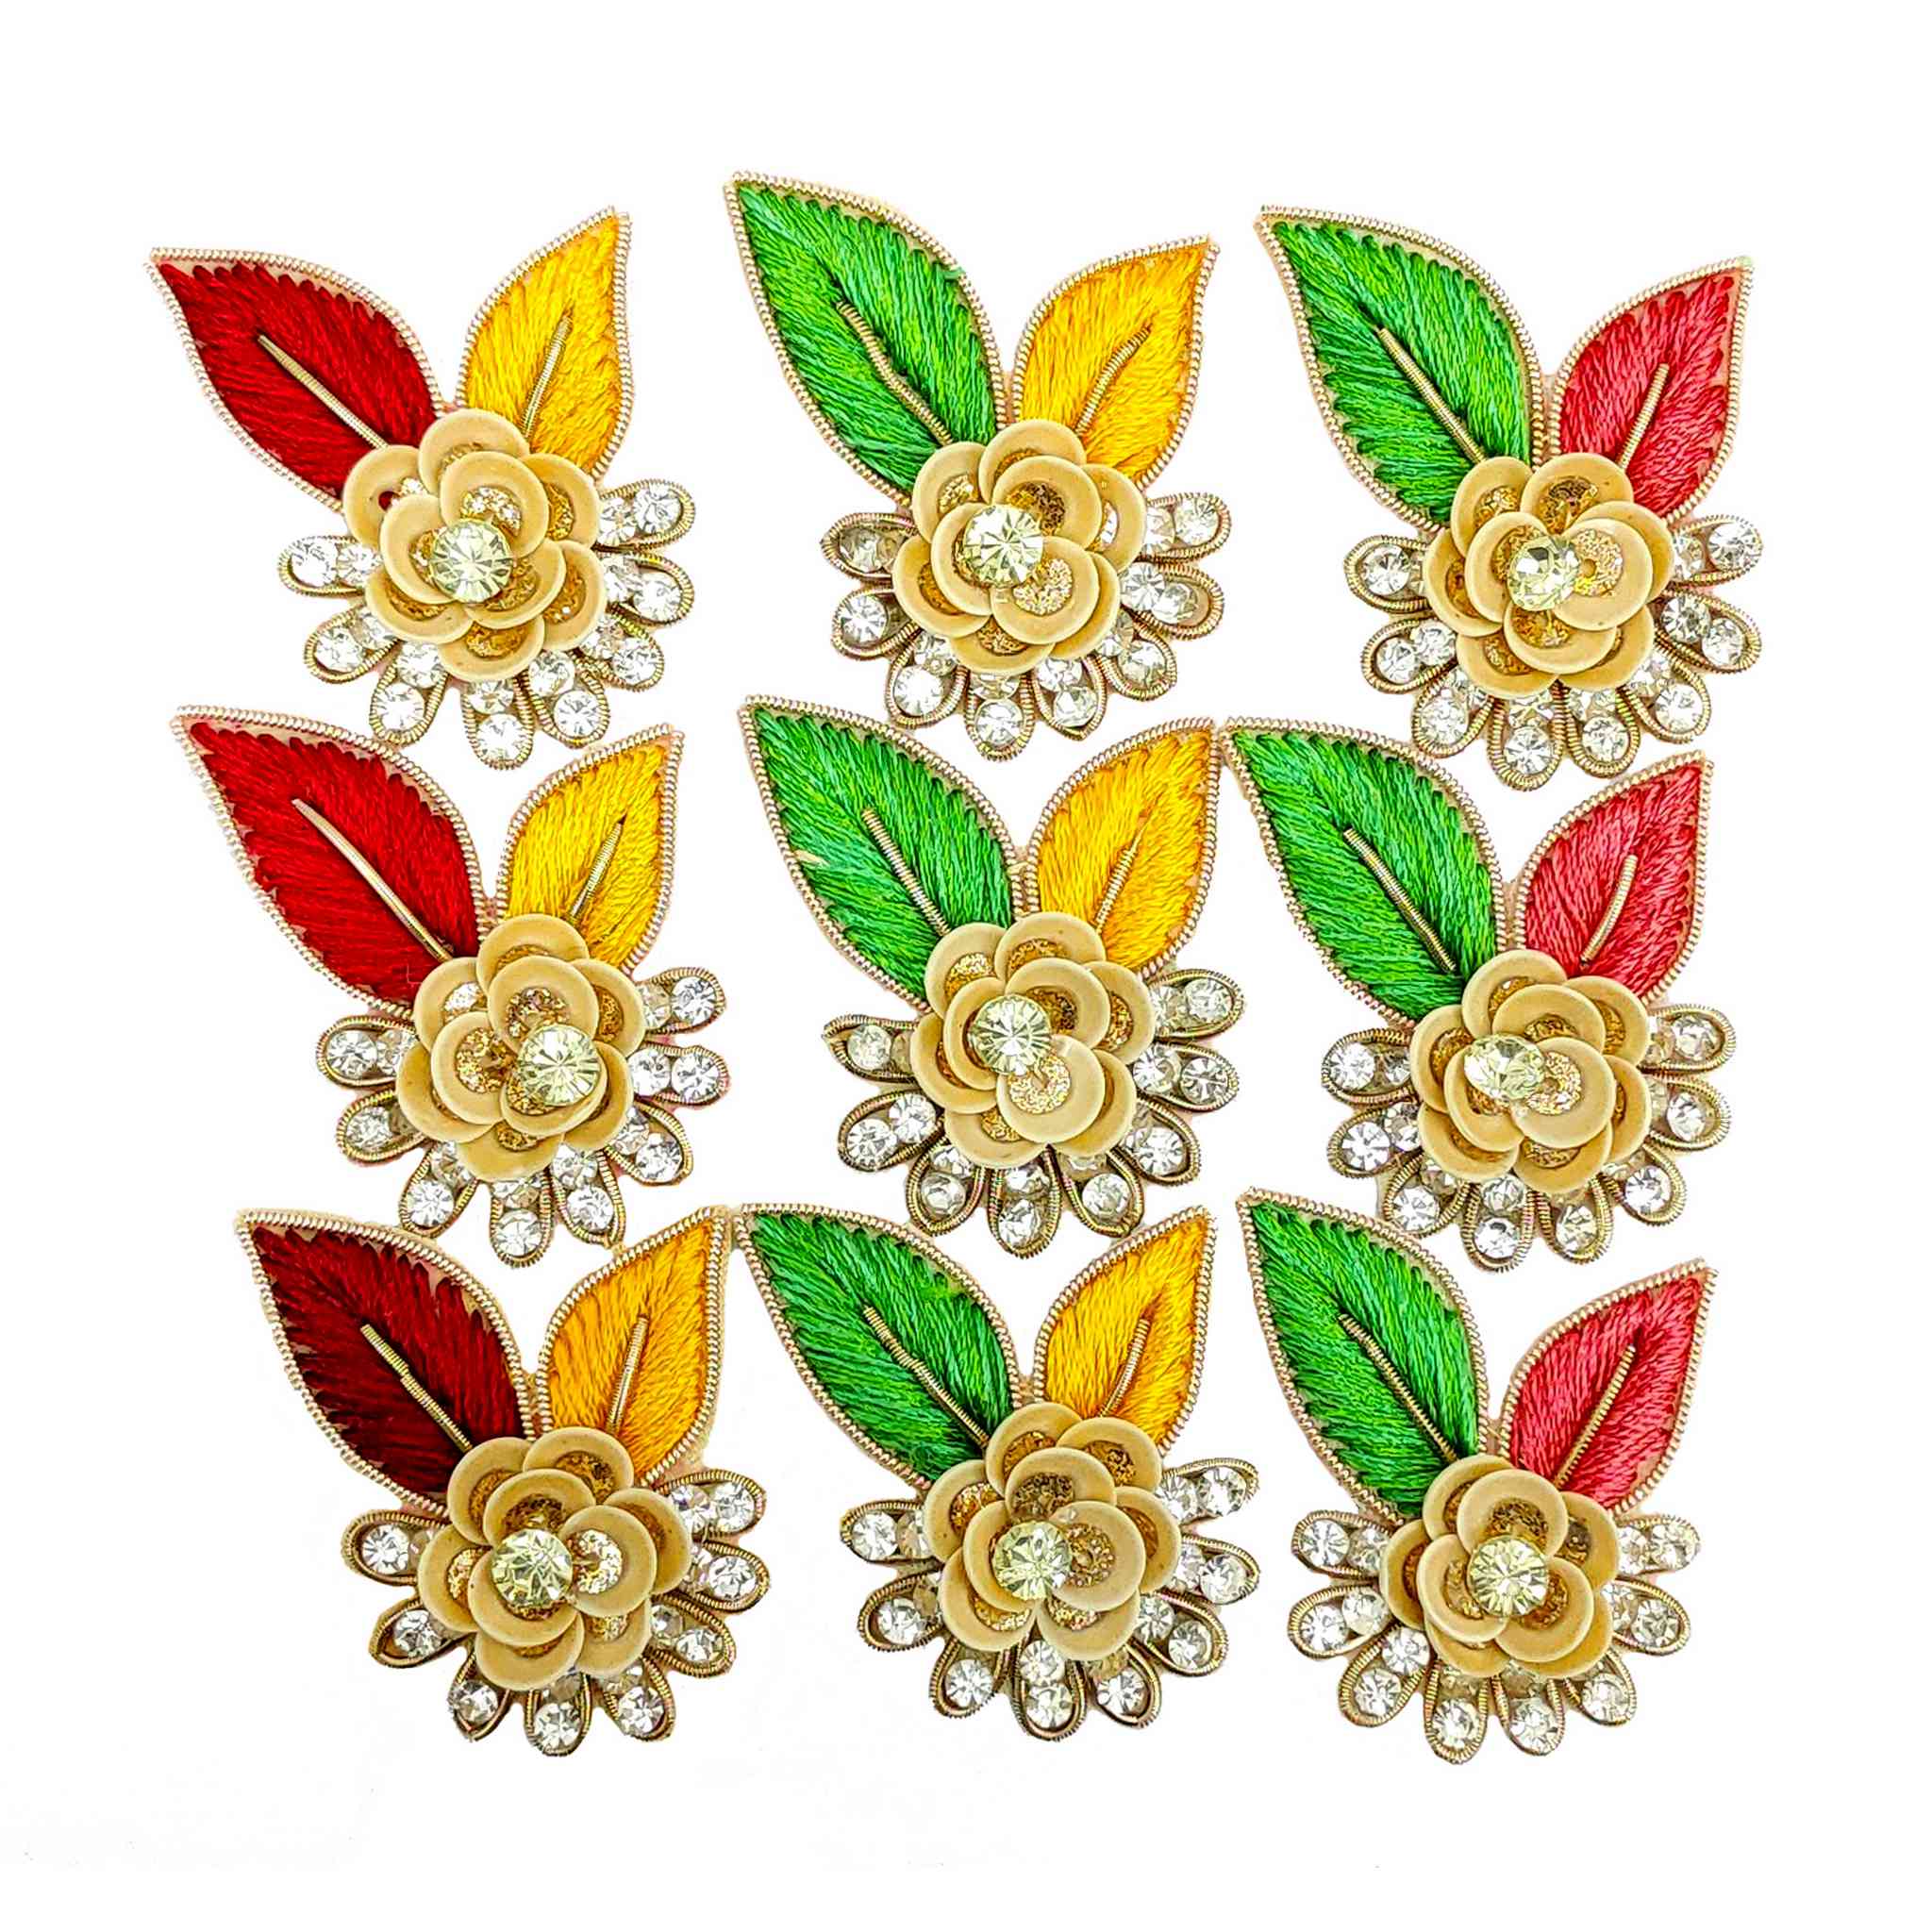 Elegant Floral Gem Brooch - Handcrafted with Vibrant Color Embroidery & Sparkling Gems - 11216